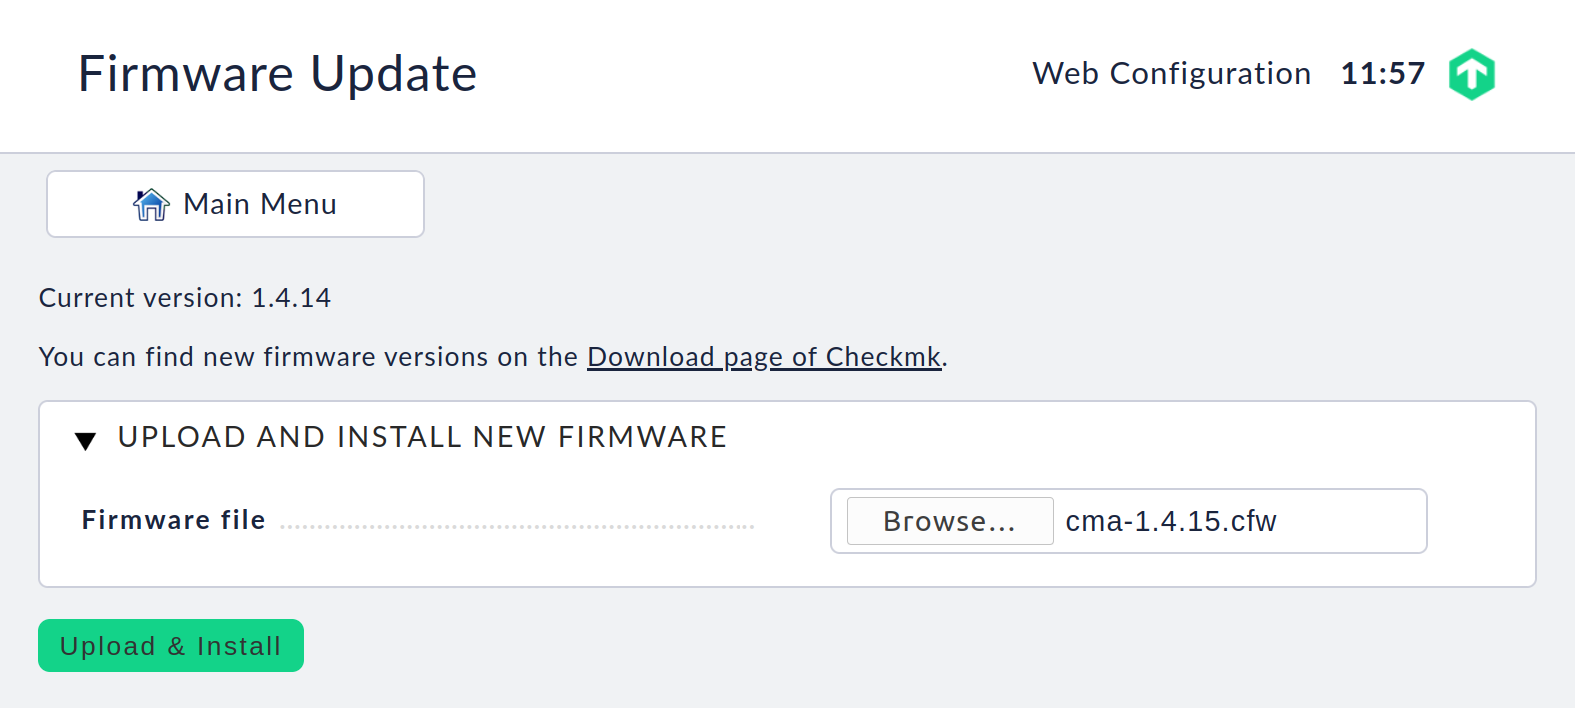 cma webconf firmware upload 2